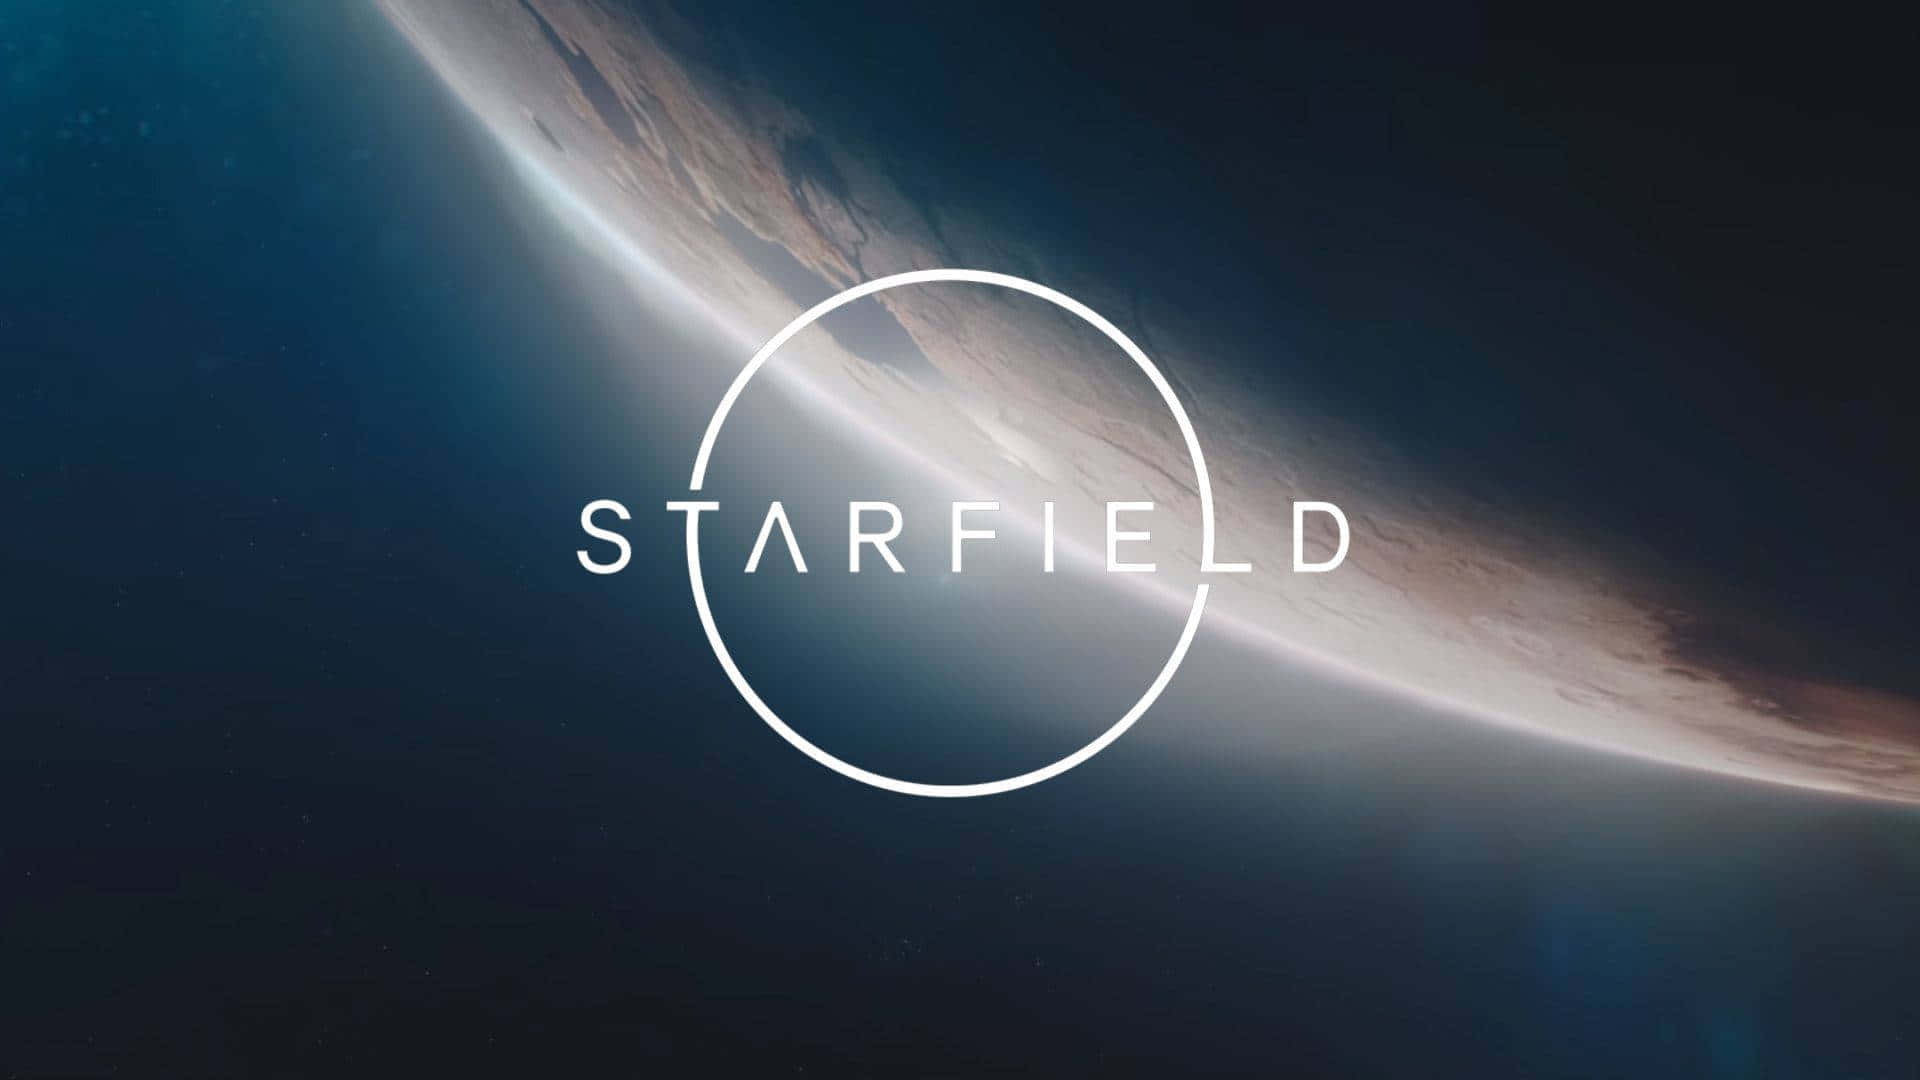 Starfield1920 X 1080 Baggrund.